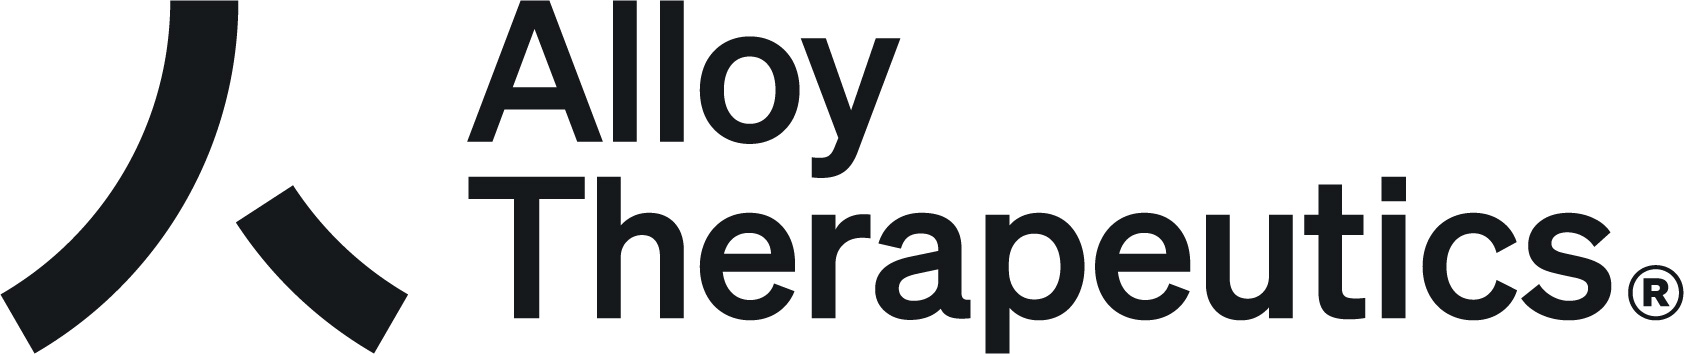 Alloy Therapeutics logo